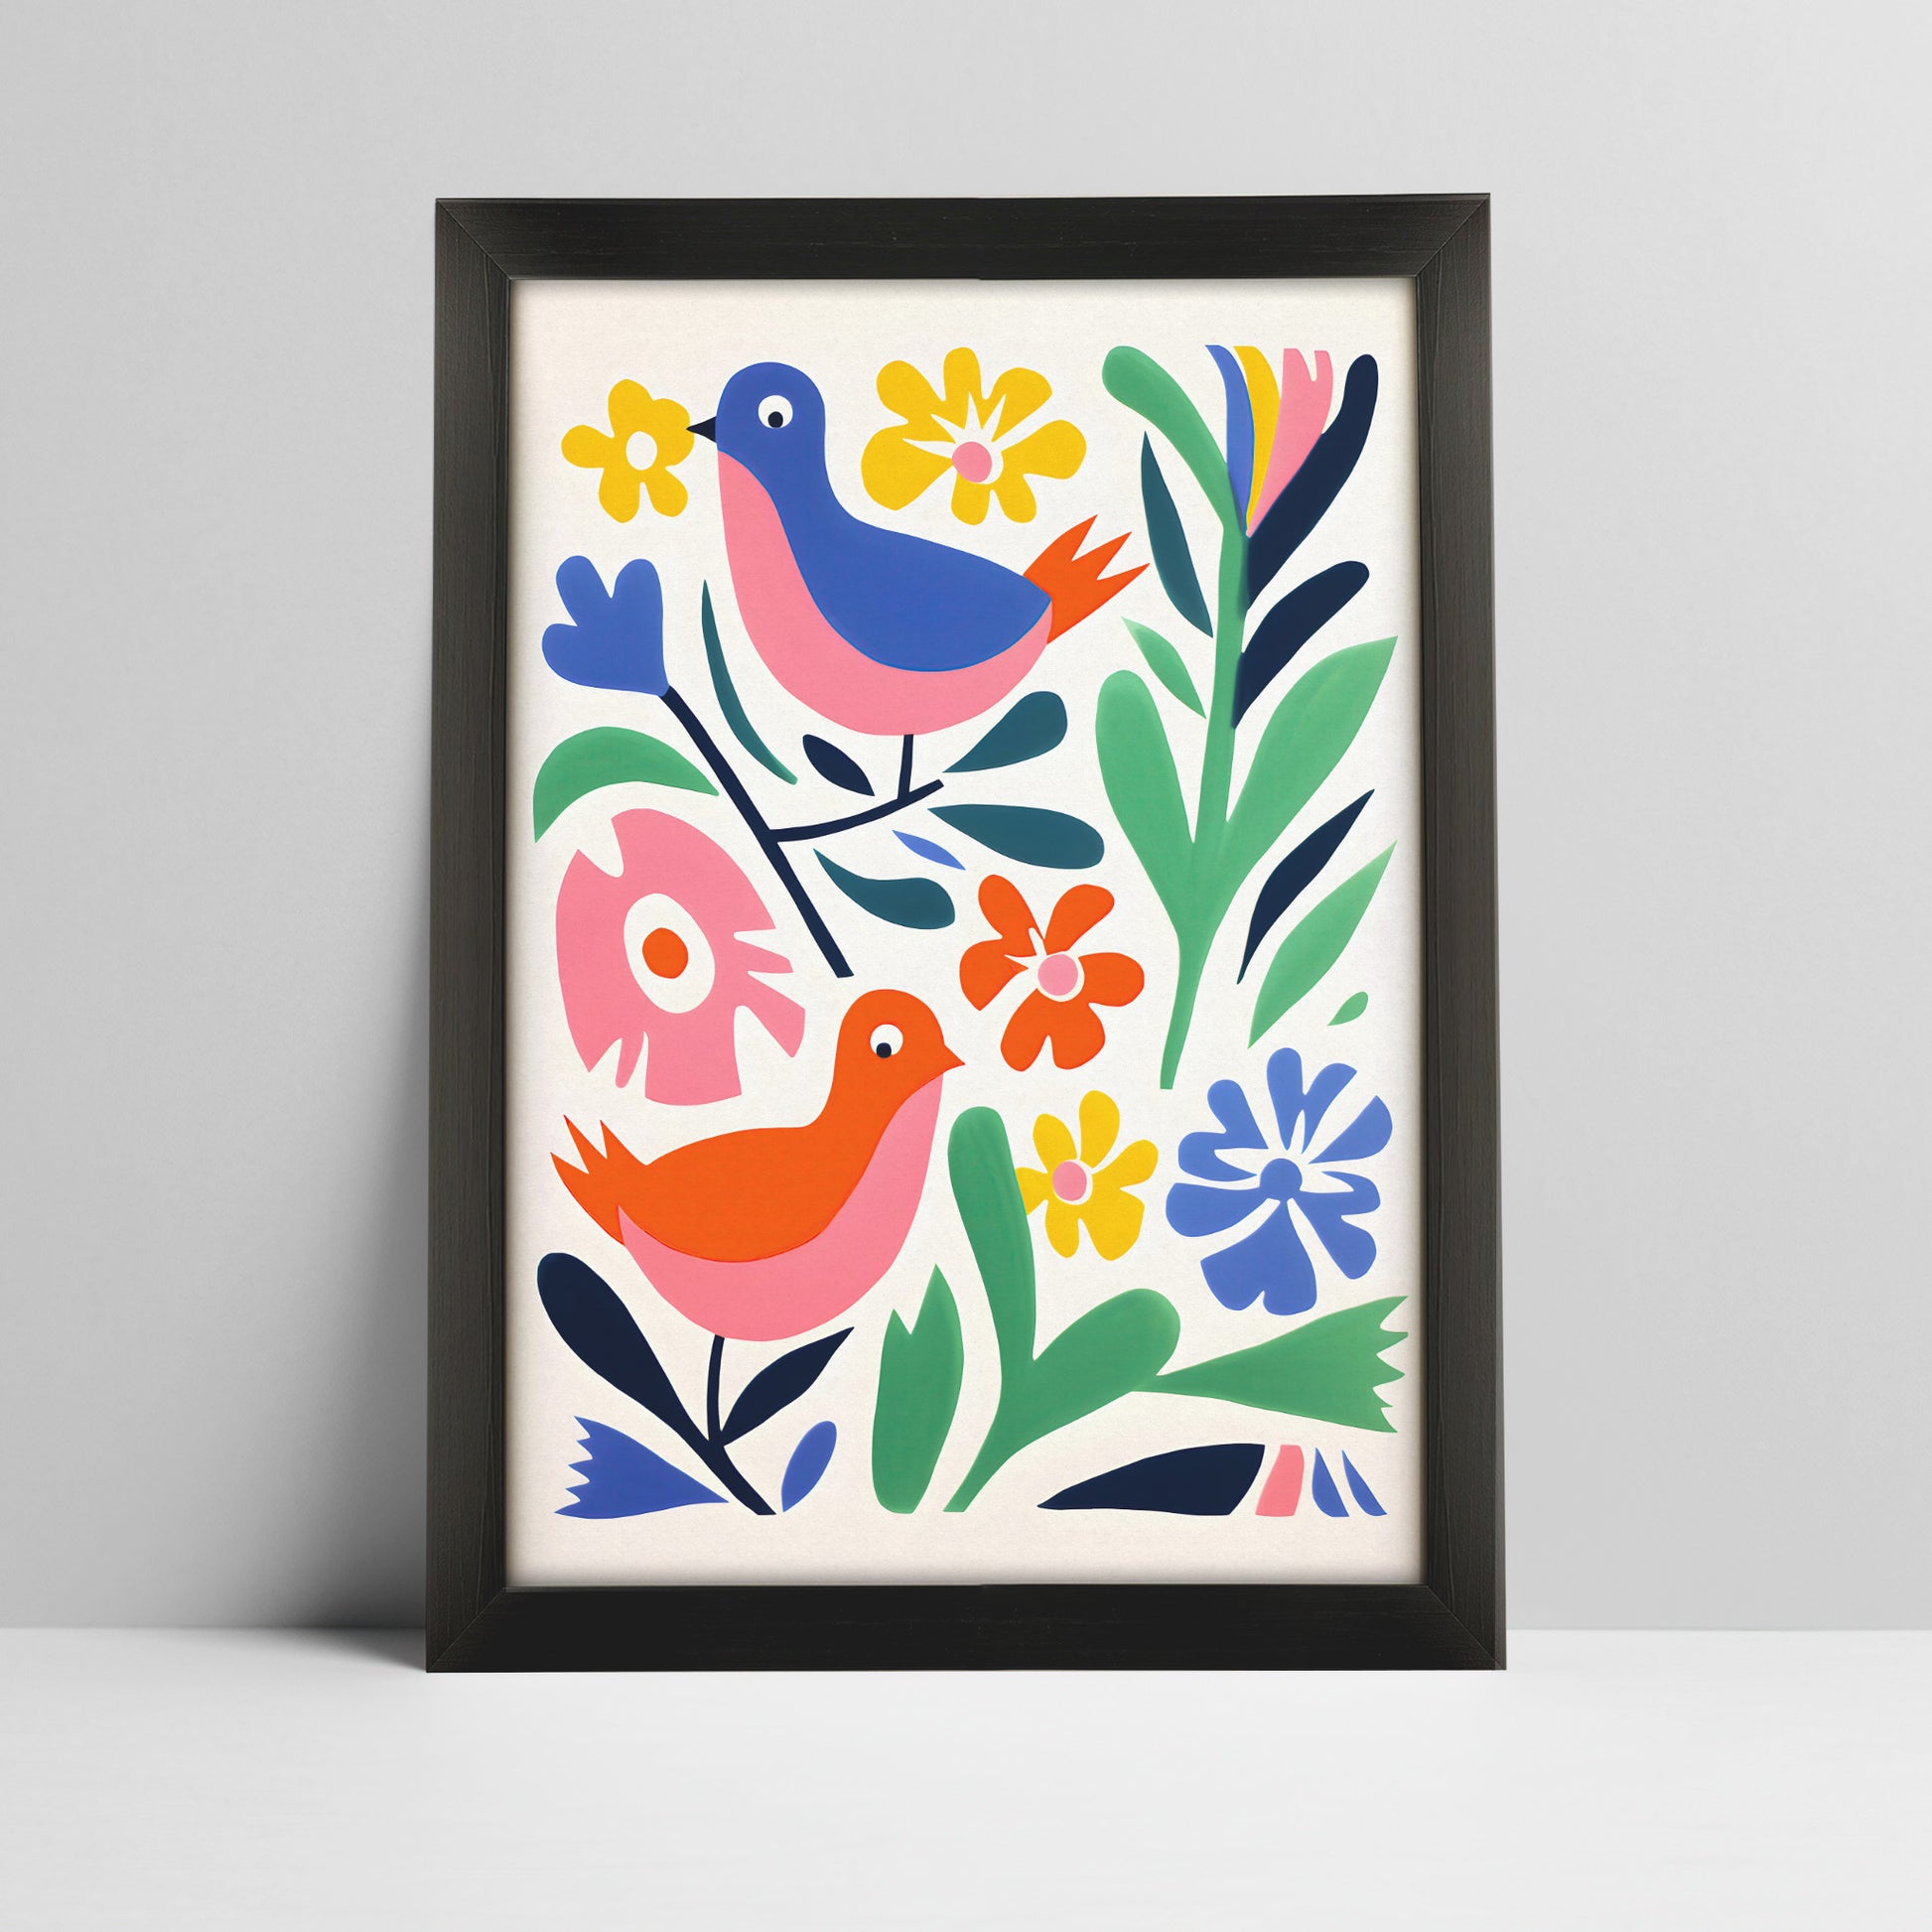 Folk art birds among vibrant flowers print in a thick black frame